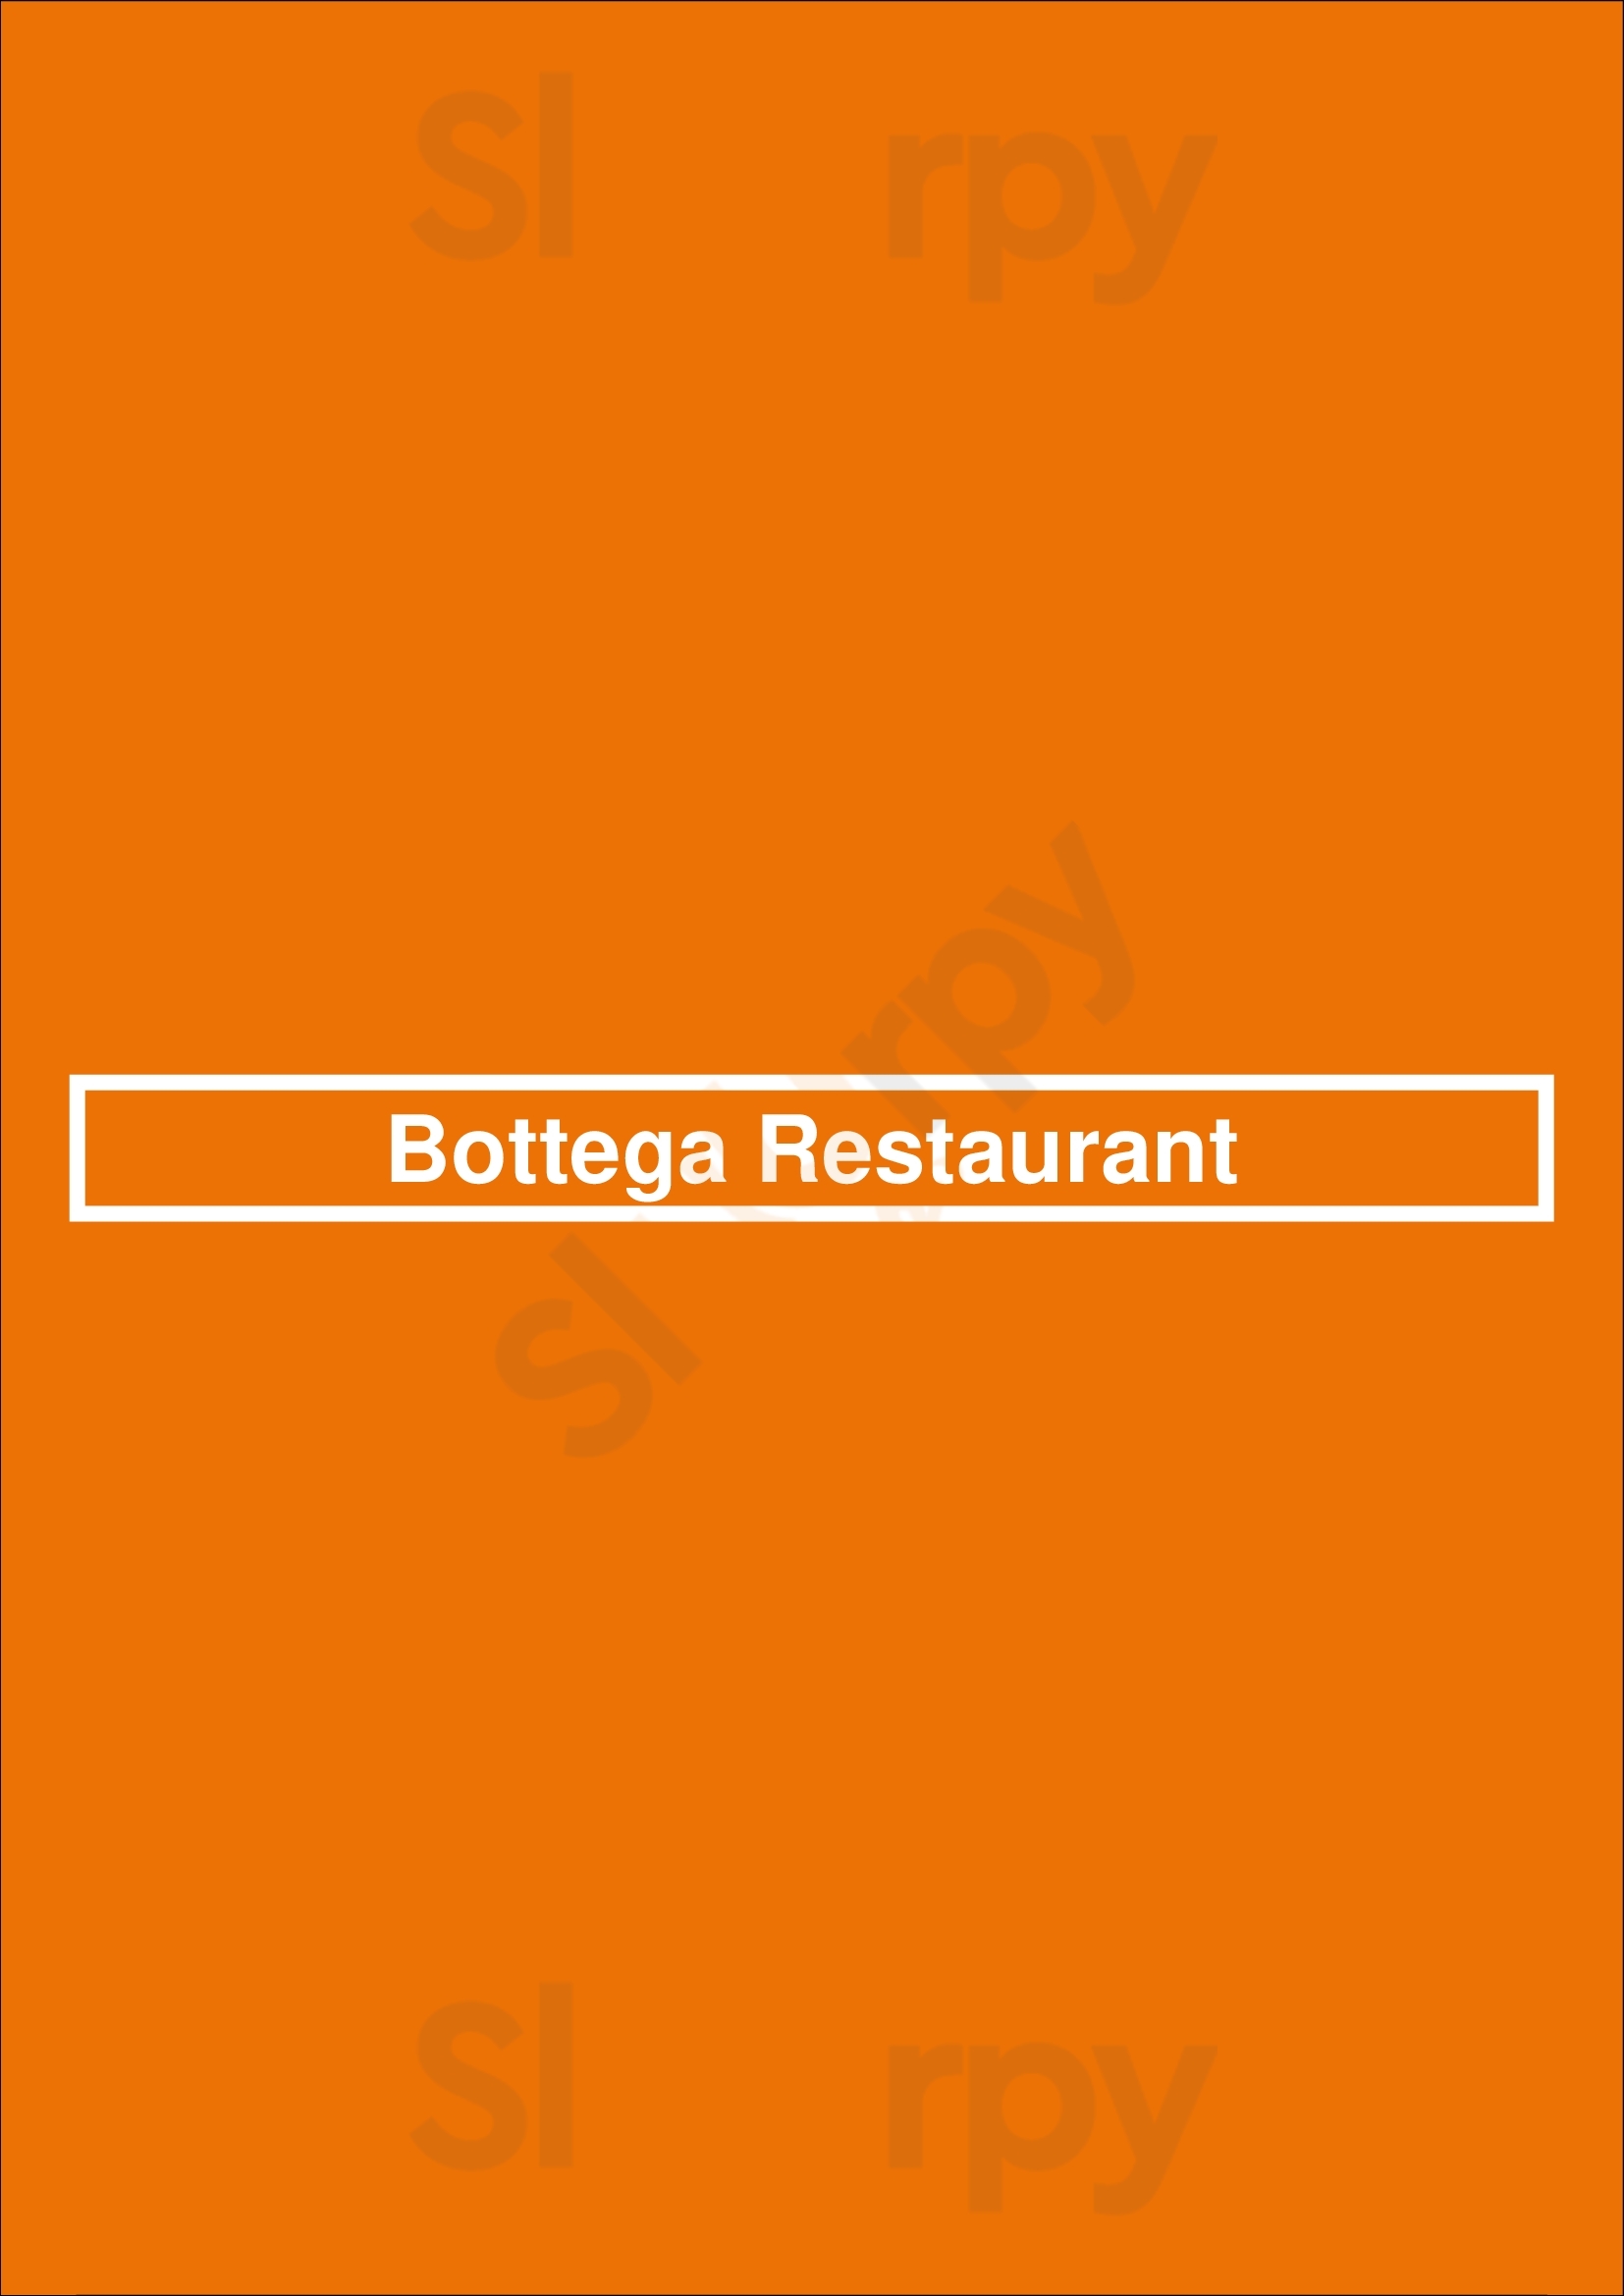 Bottega Restaurant New York City Menu - 1